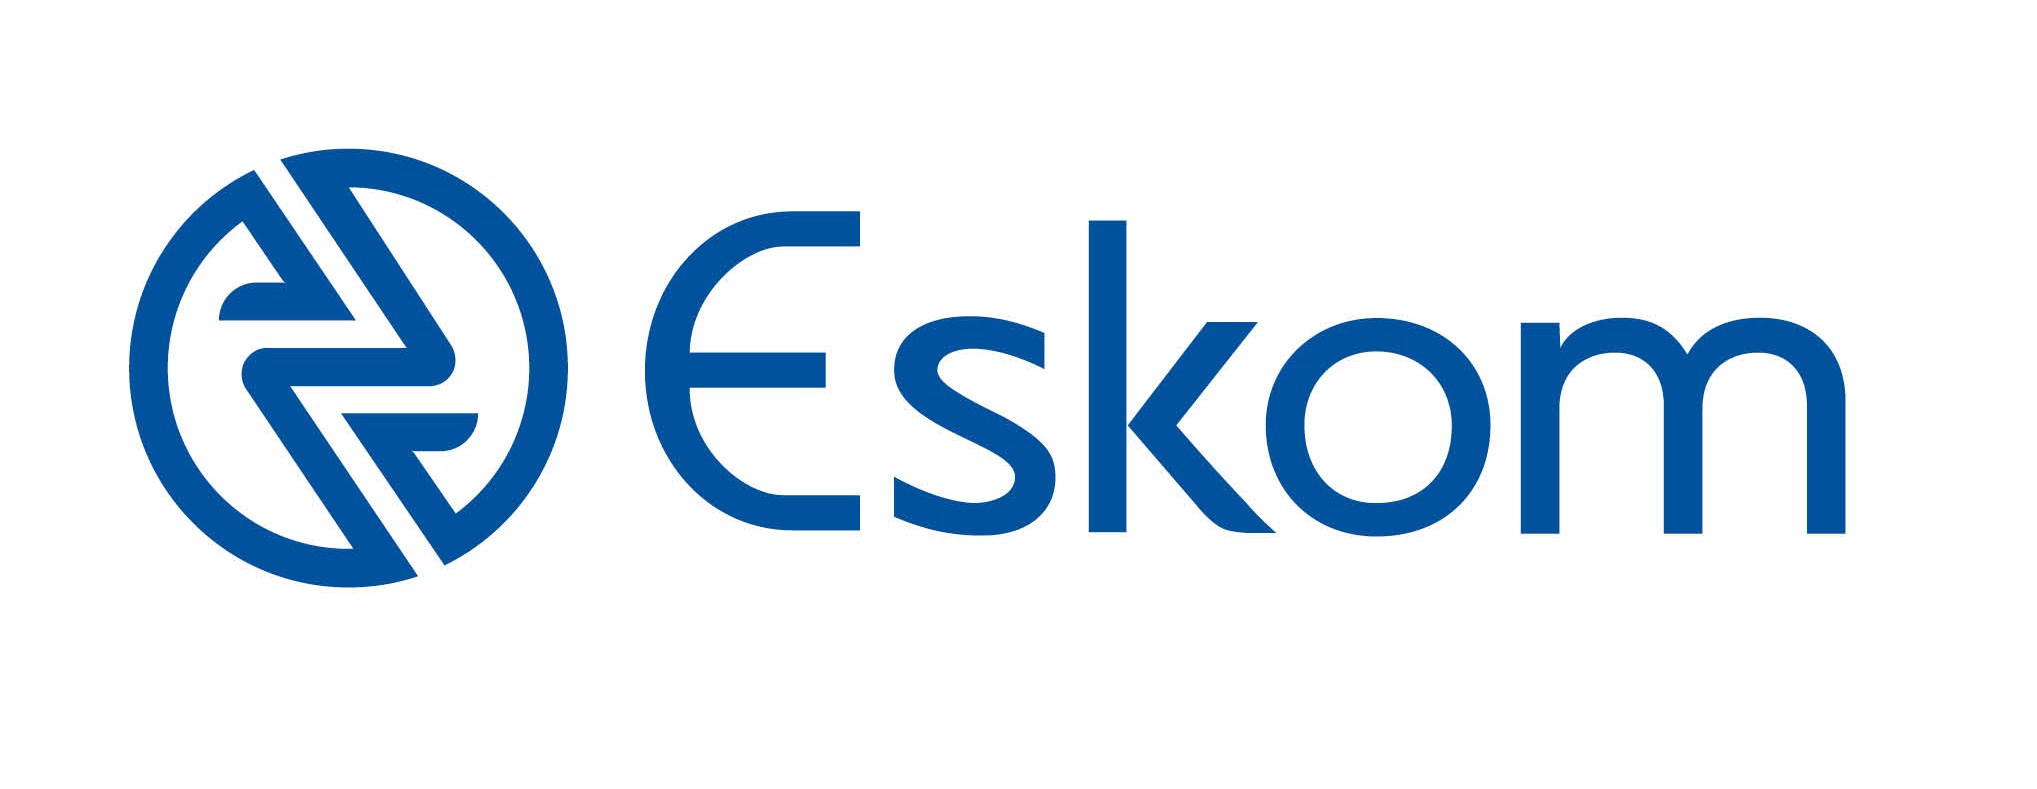 Eskom logo.jpg - 99.75 kB